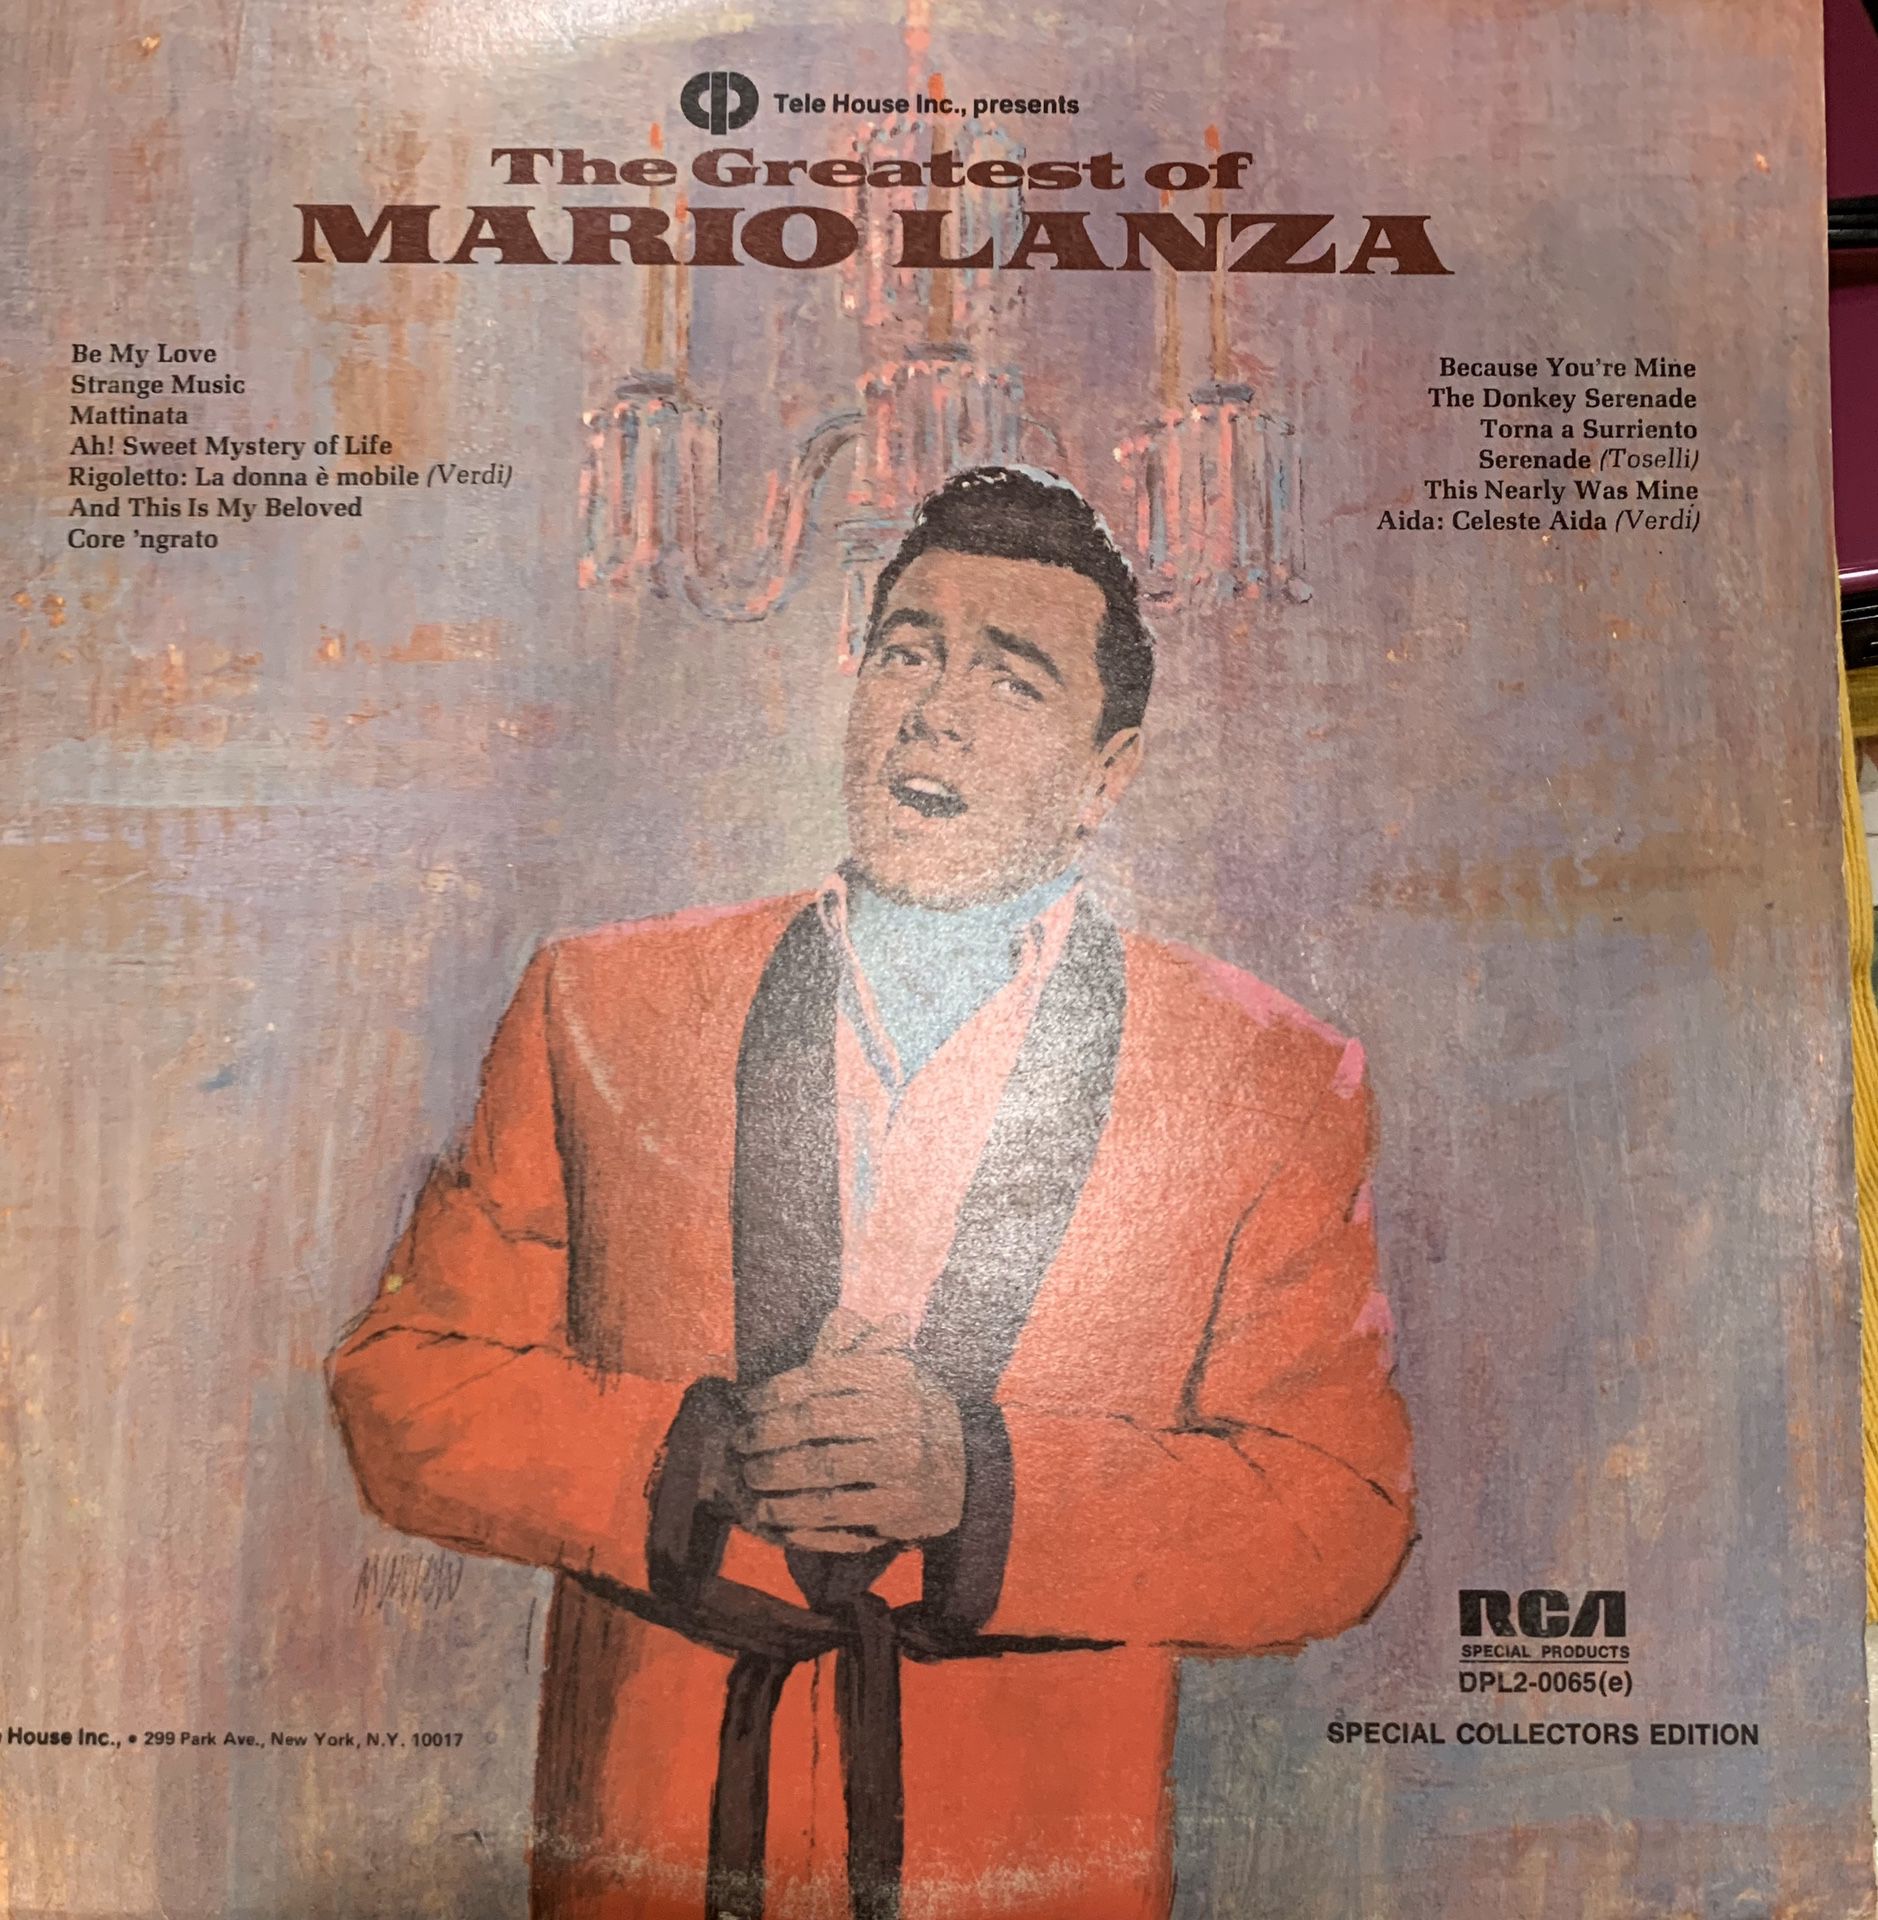 The Greatest Hits of Mario Lanza vinyl